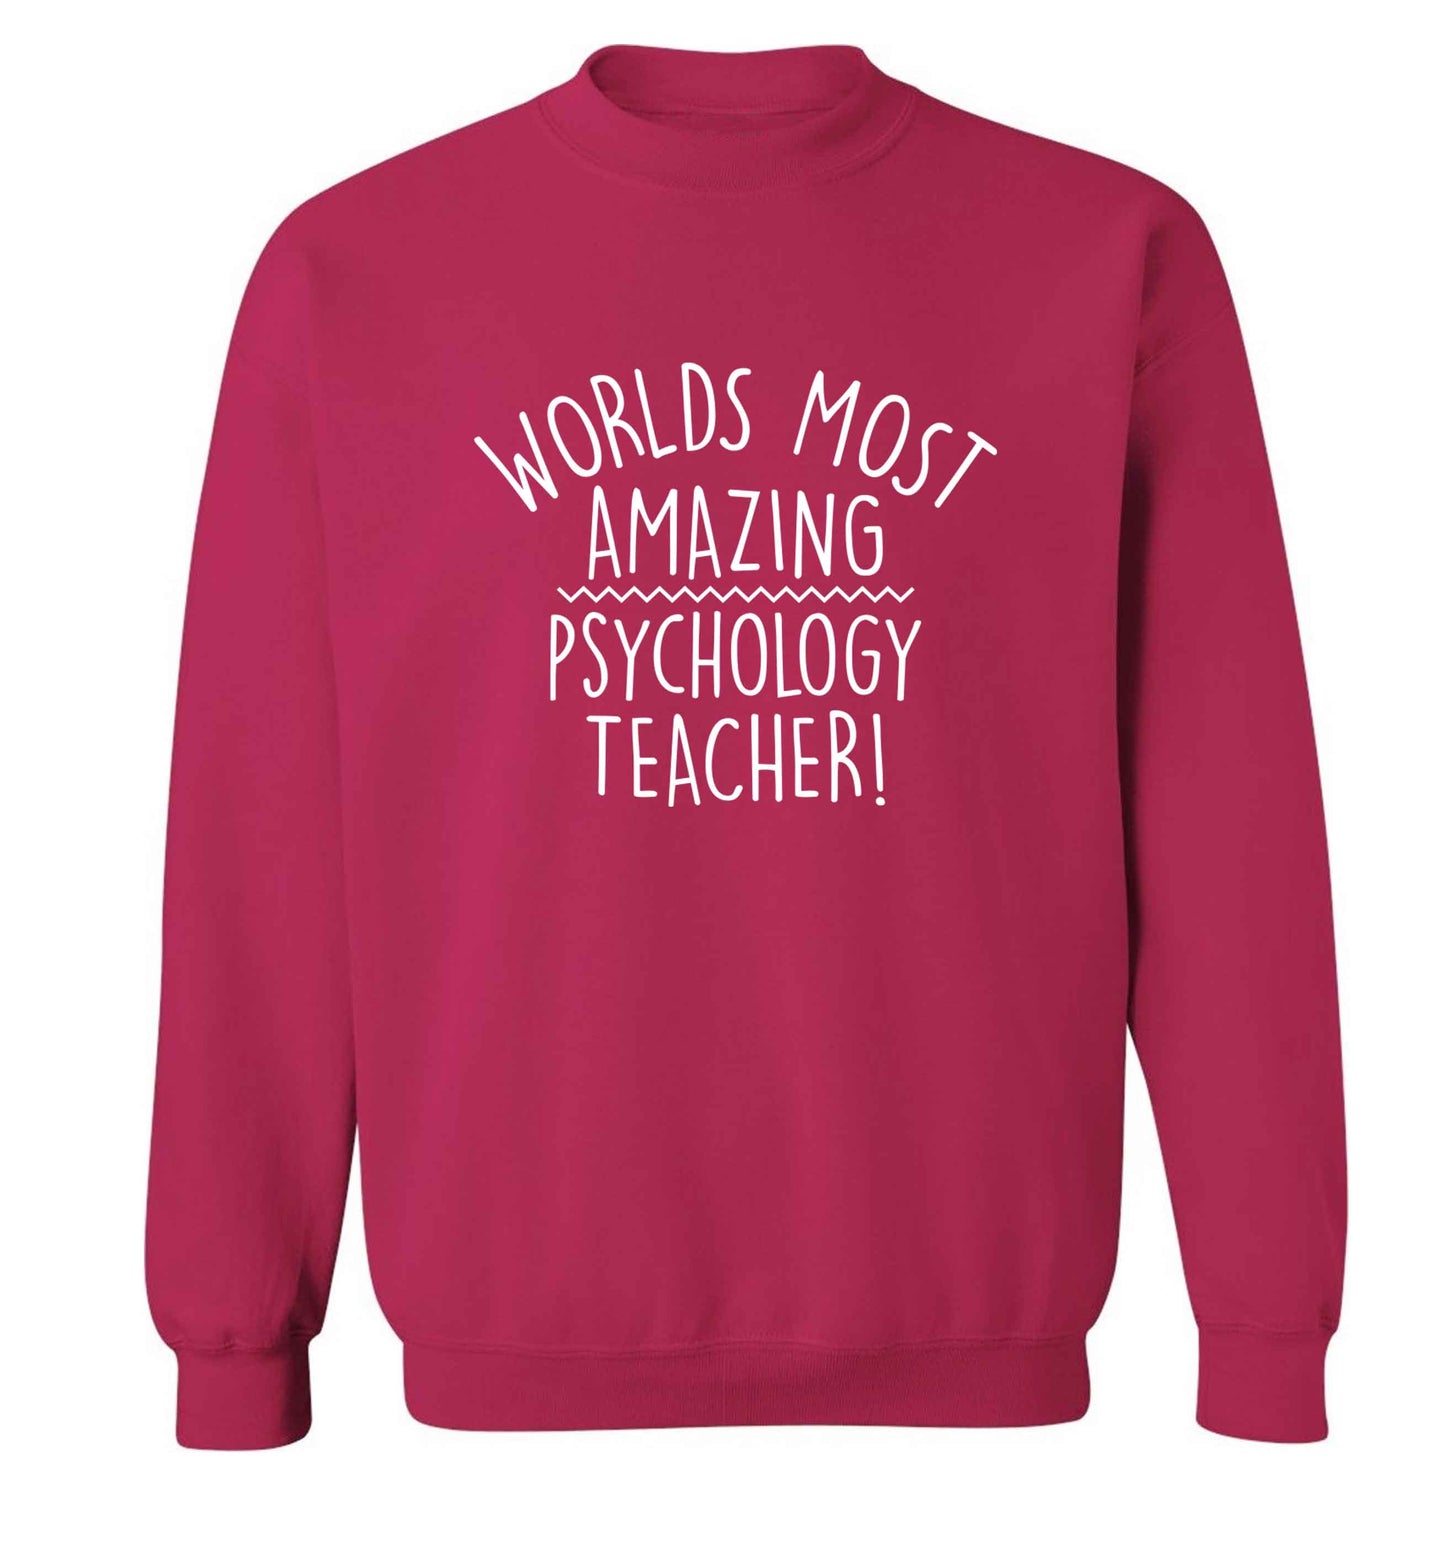 Worlds most amazing psychology teacher adult's unisex pink sweater 2XL